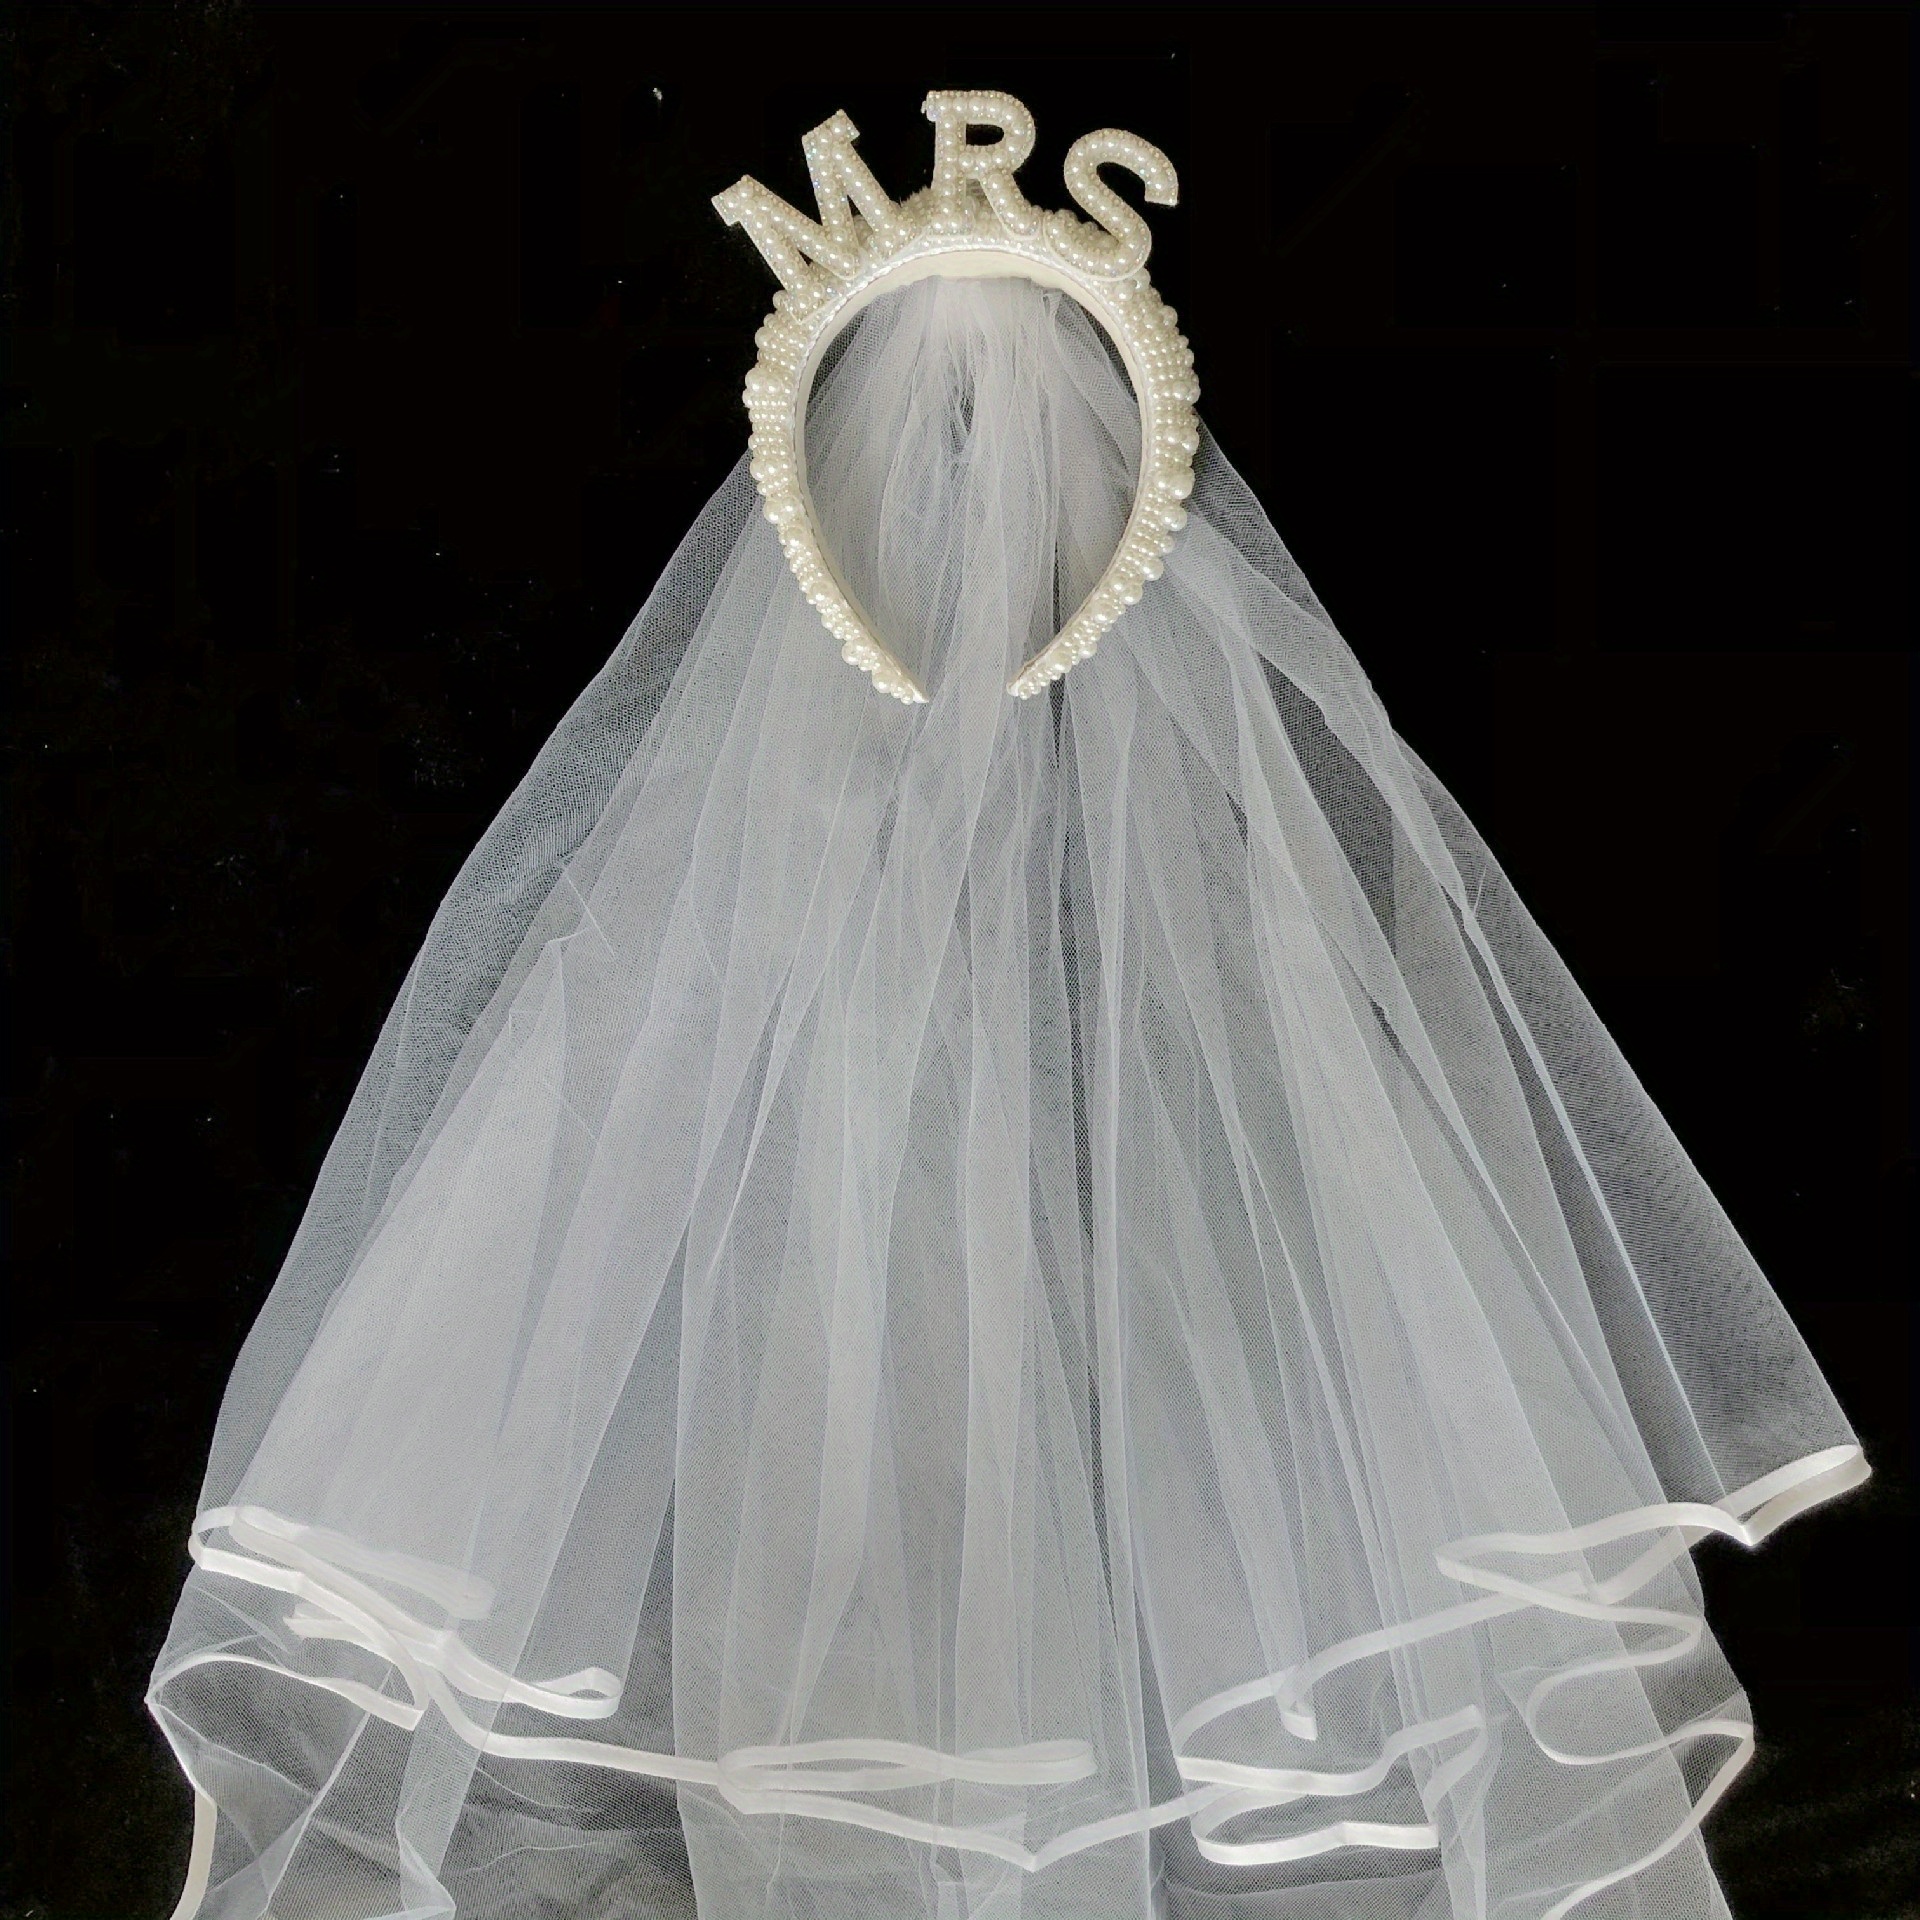 Classy Bride Wifey Wedding Underwear Bedazzled Bridal Lingerie for Women -  White